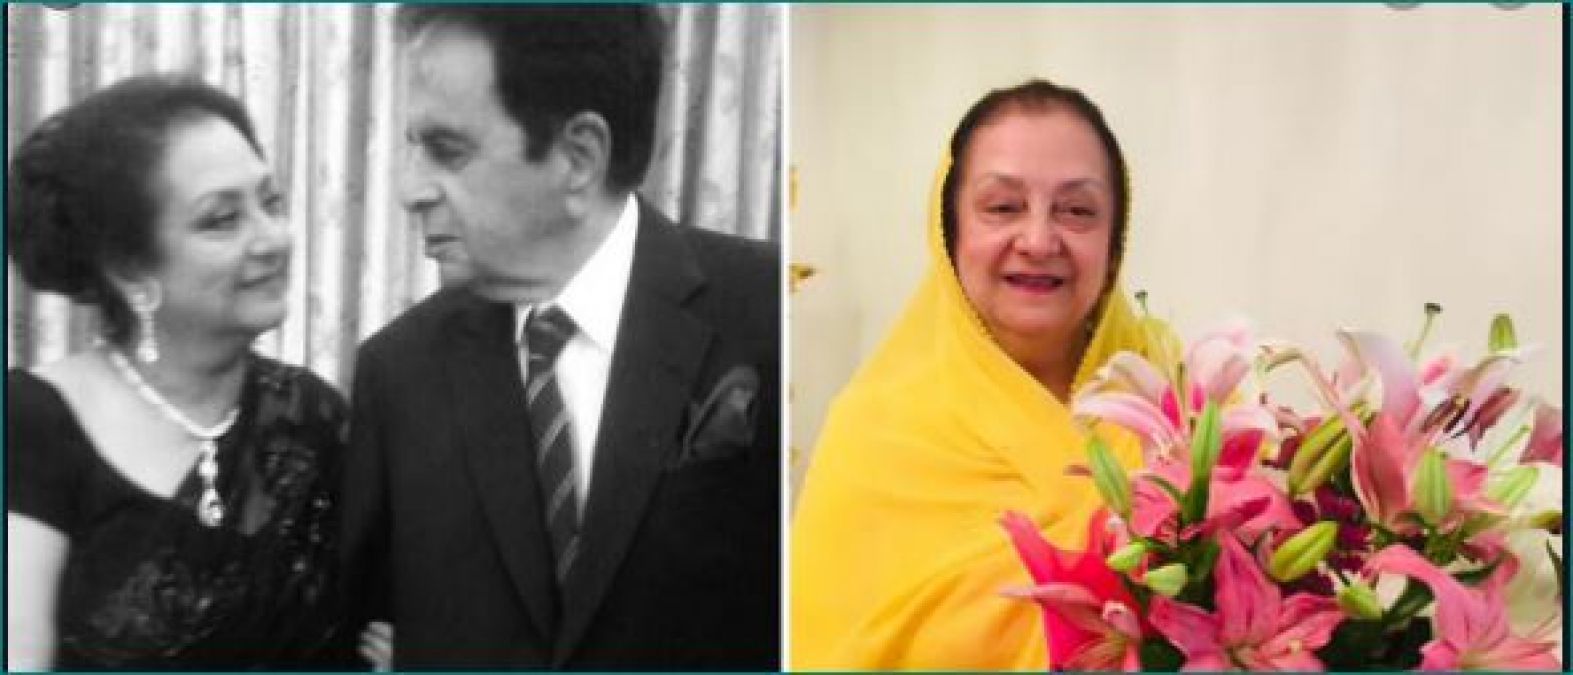 Dilip Kumar will not celebrate his 98th birthday, Saira Banu reveals reason